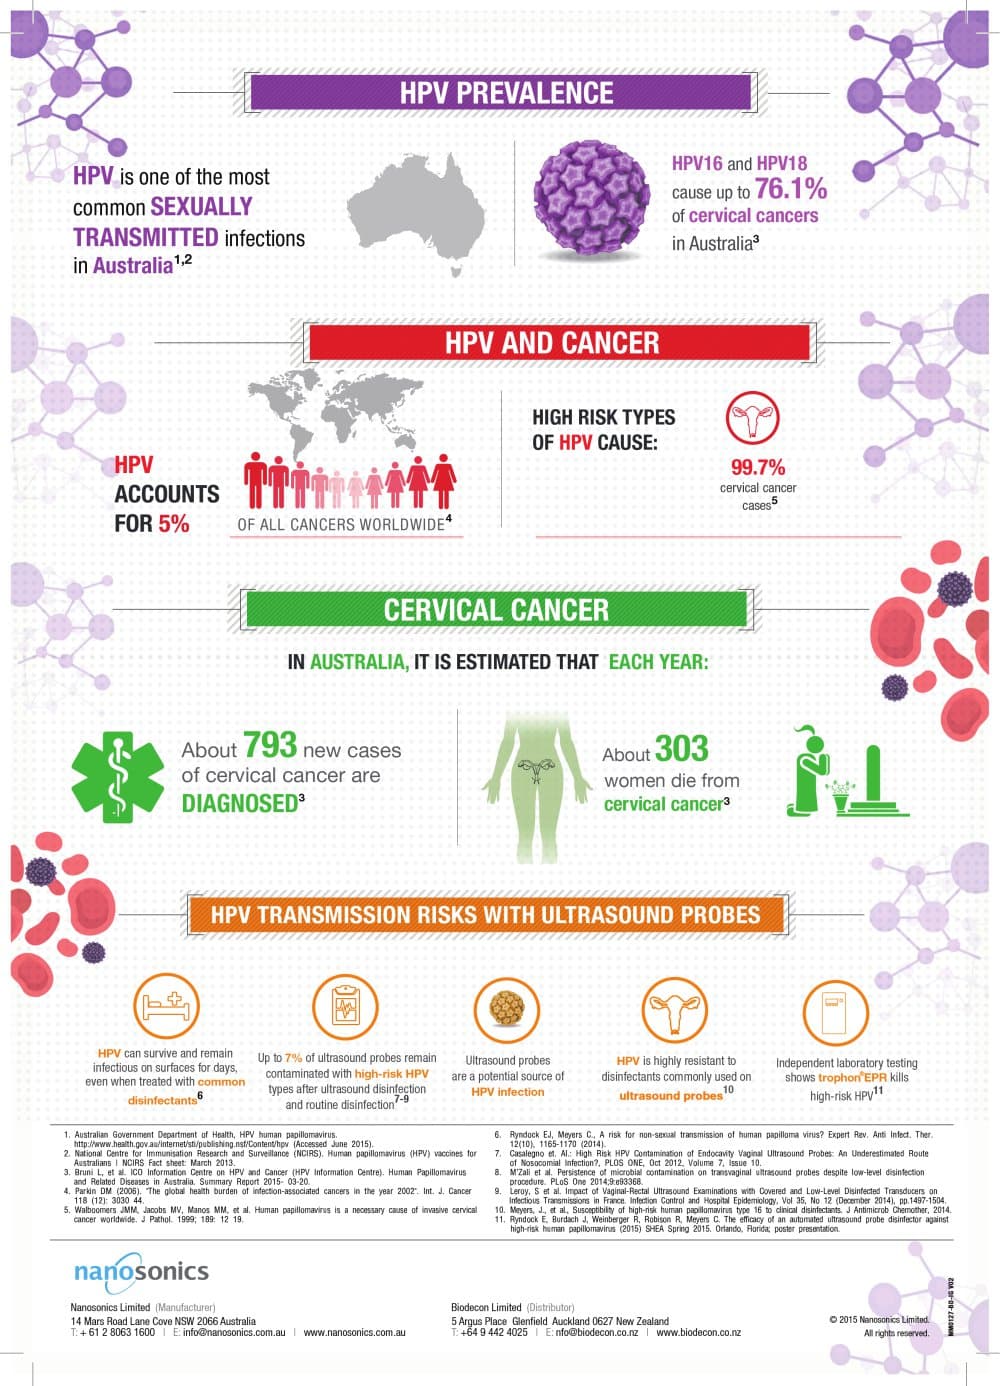 How common is HPV in Australia?